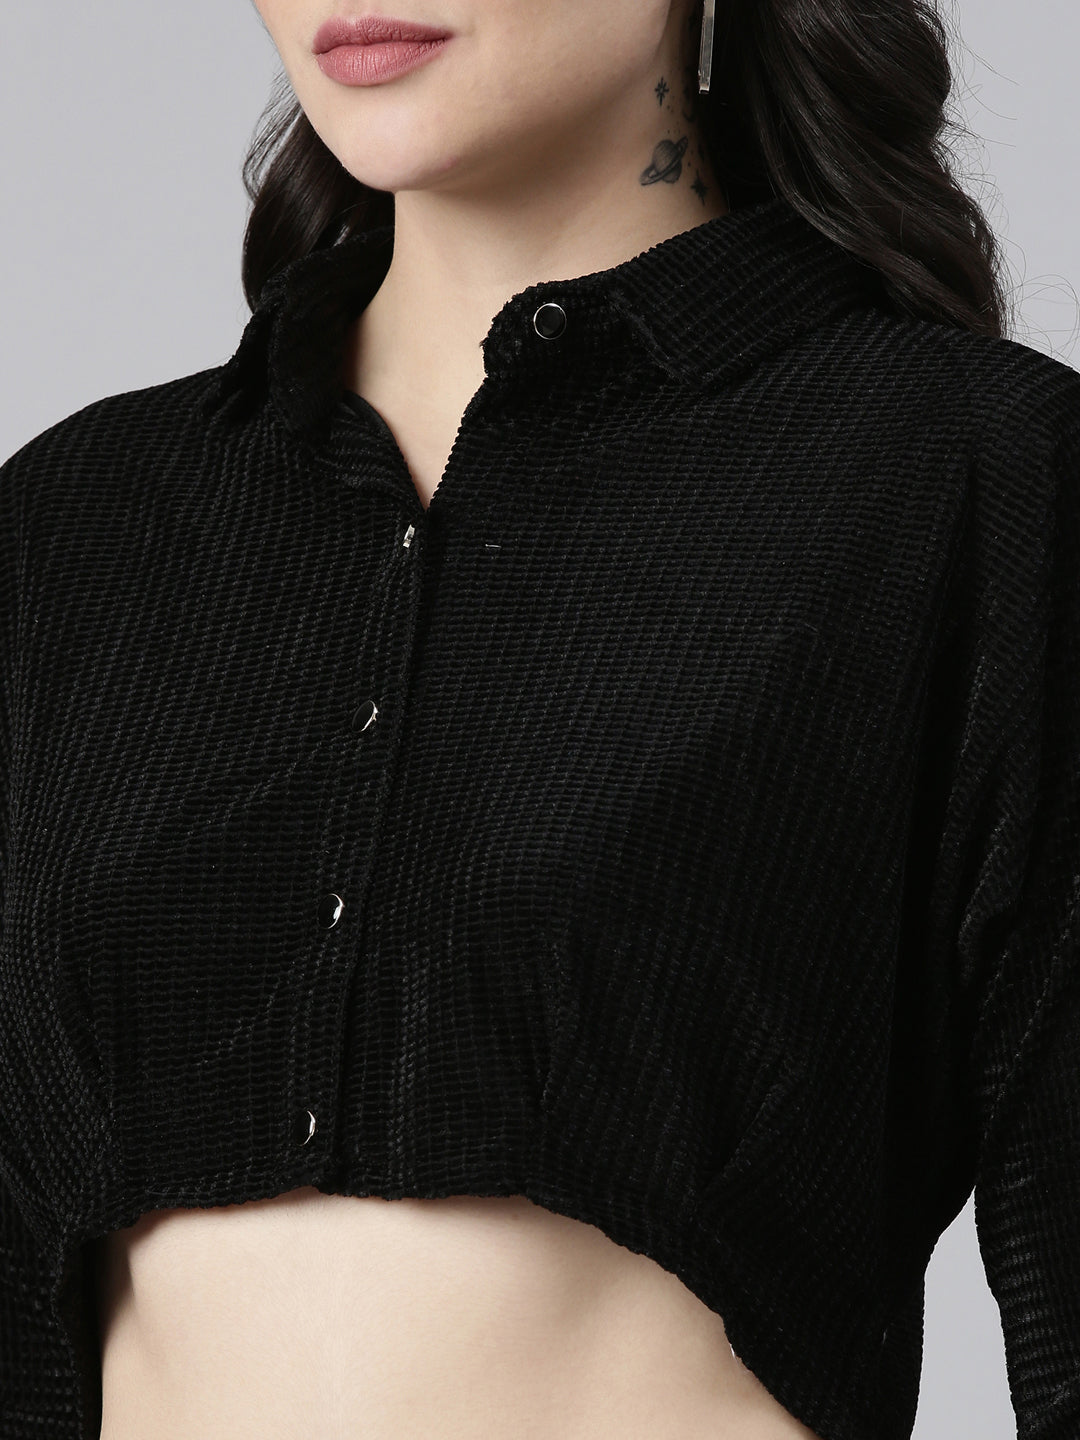 Shirt Collar Kimono Sleeves Self Design Black Crop Top